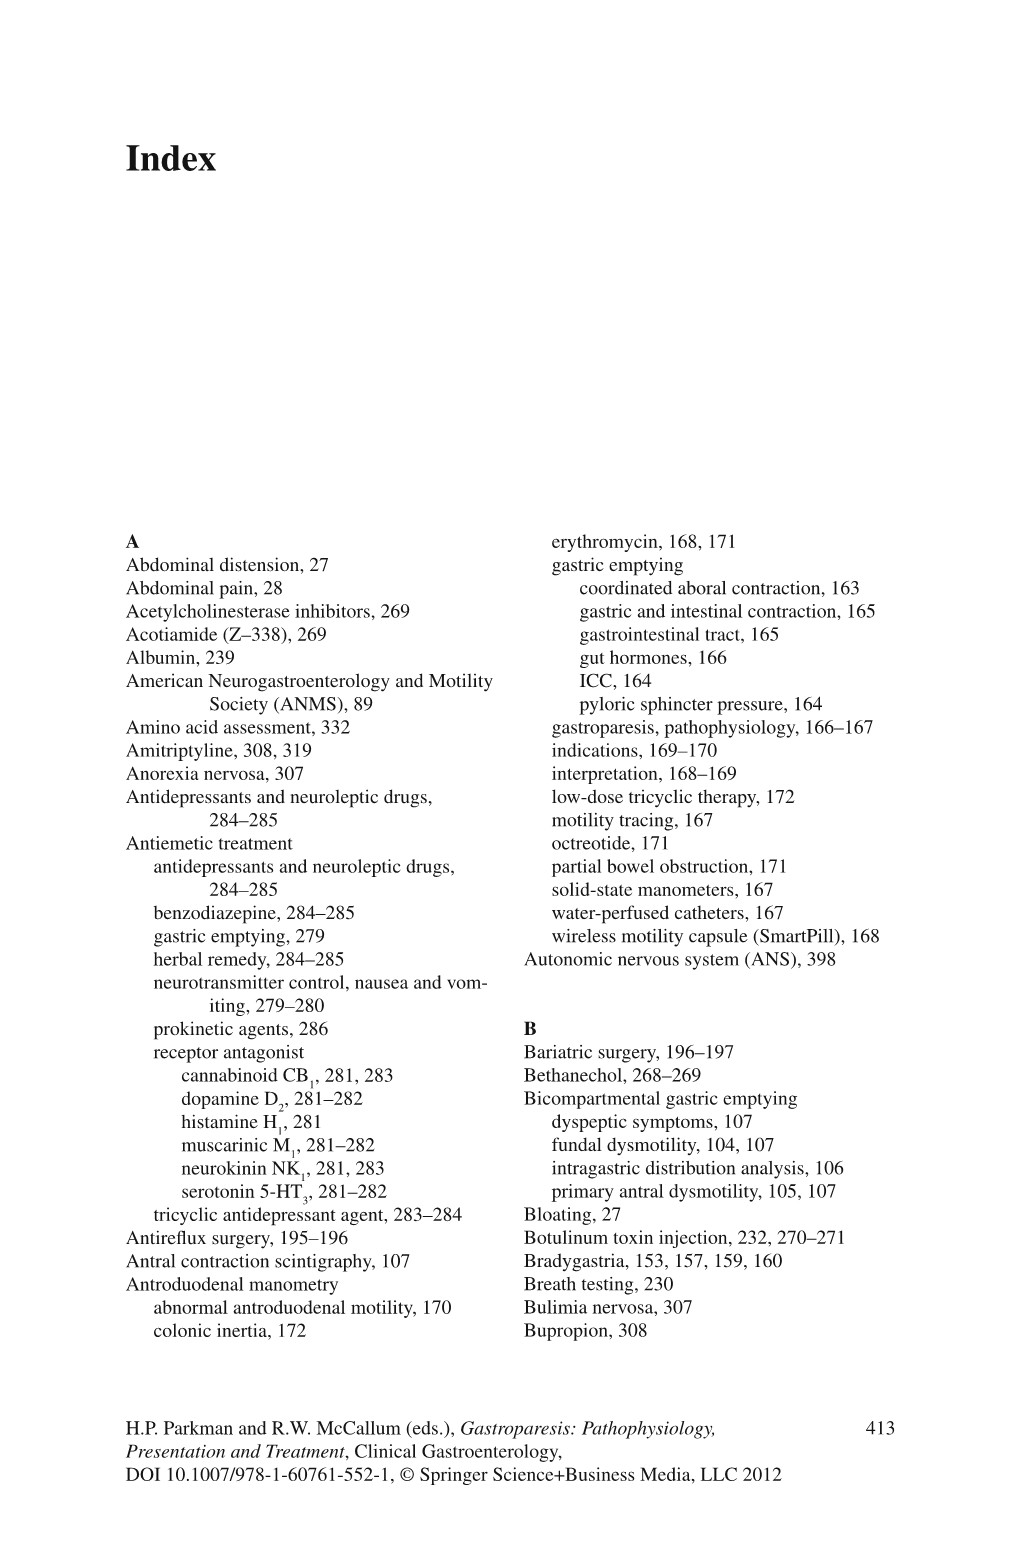 413 H.P. Parkman and R.W. Mccallum (Eds.), Gastroparesis